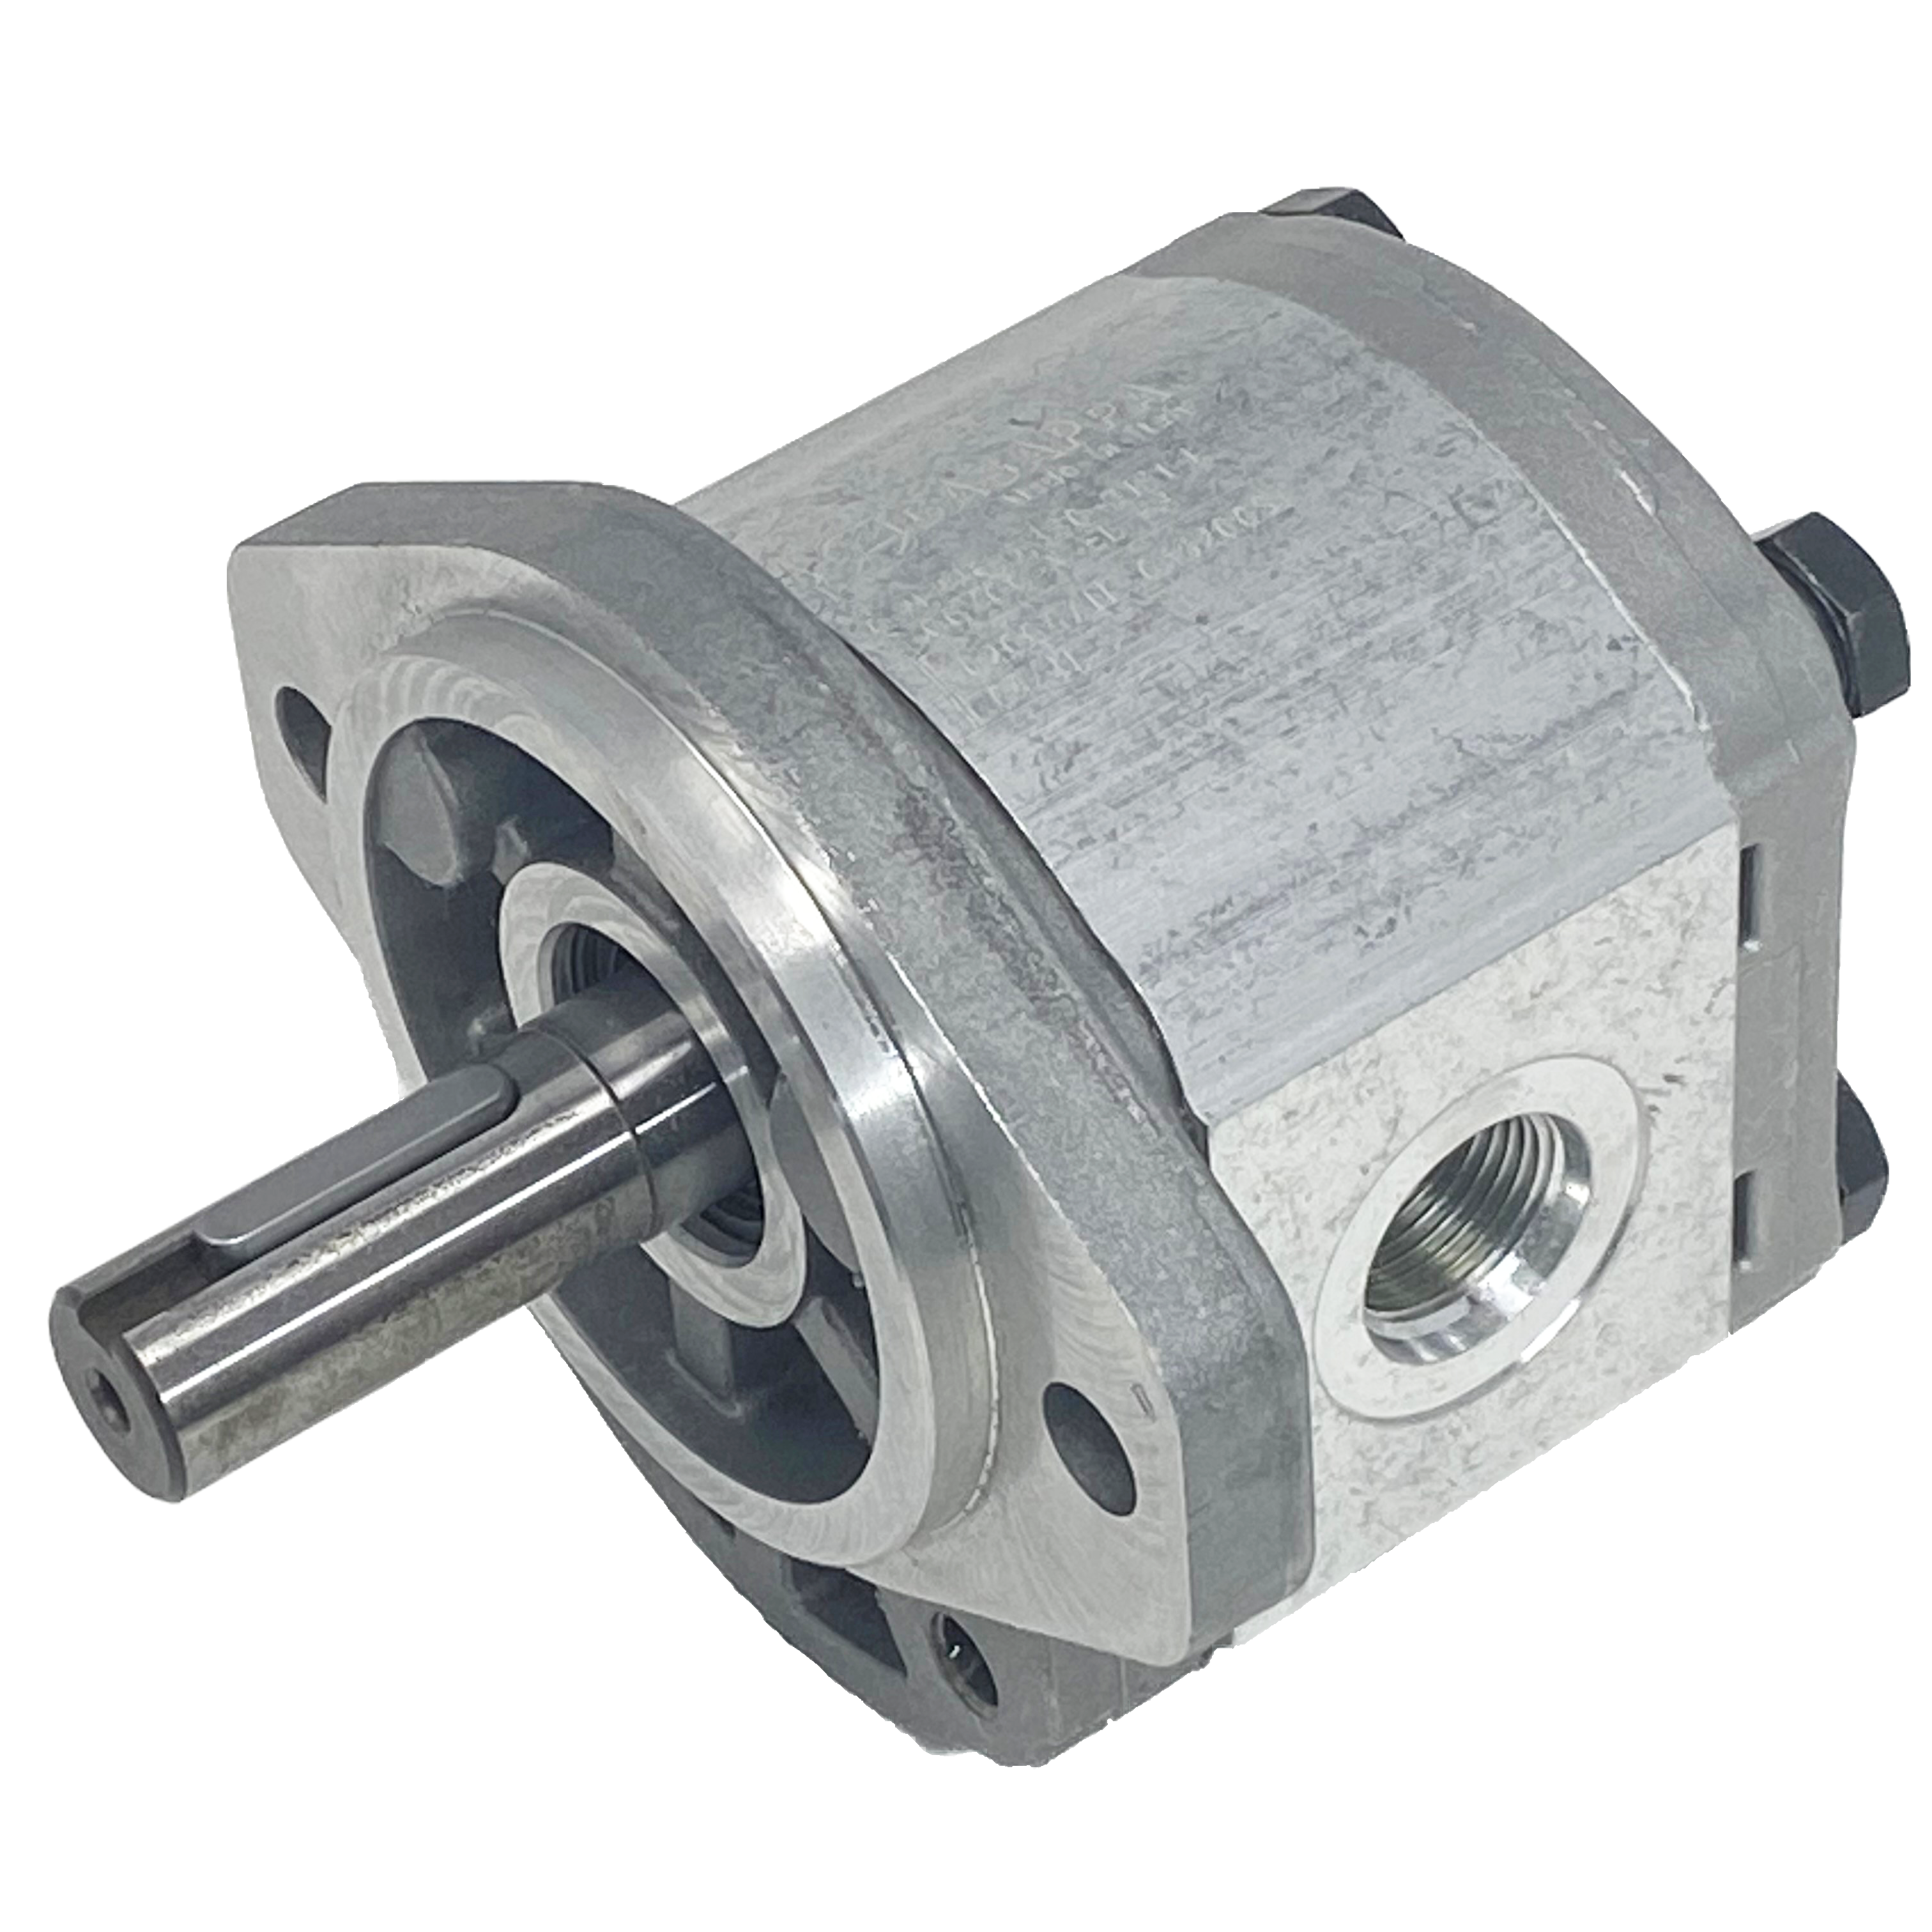 PLM20.14R0-49S1-LOC/OD-N-EL : Casappa Polaris Gear Motor, 14.53cc, 3625psi Rated, 3500RPM, Reversible Rear External Drain, 3/4" Bore x 3/16" Key Shaft, SAE A 2-Bolt Flange, 0.625 (5/8") #10 SAE Inlet, 0.75 (3/4") #12 SAE Outlet, Aluminum Body & Flange